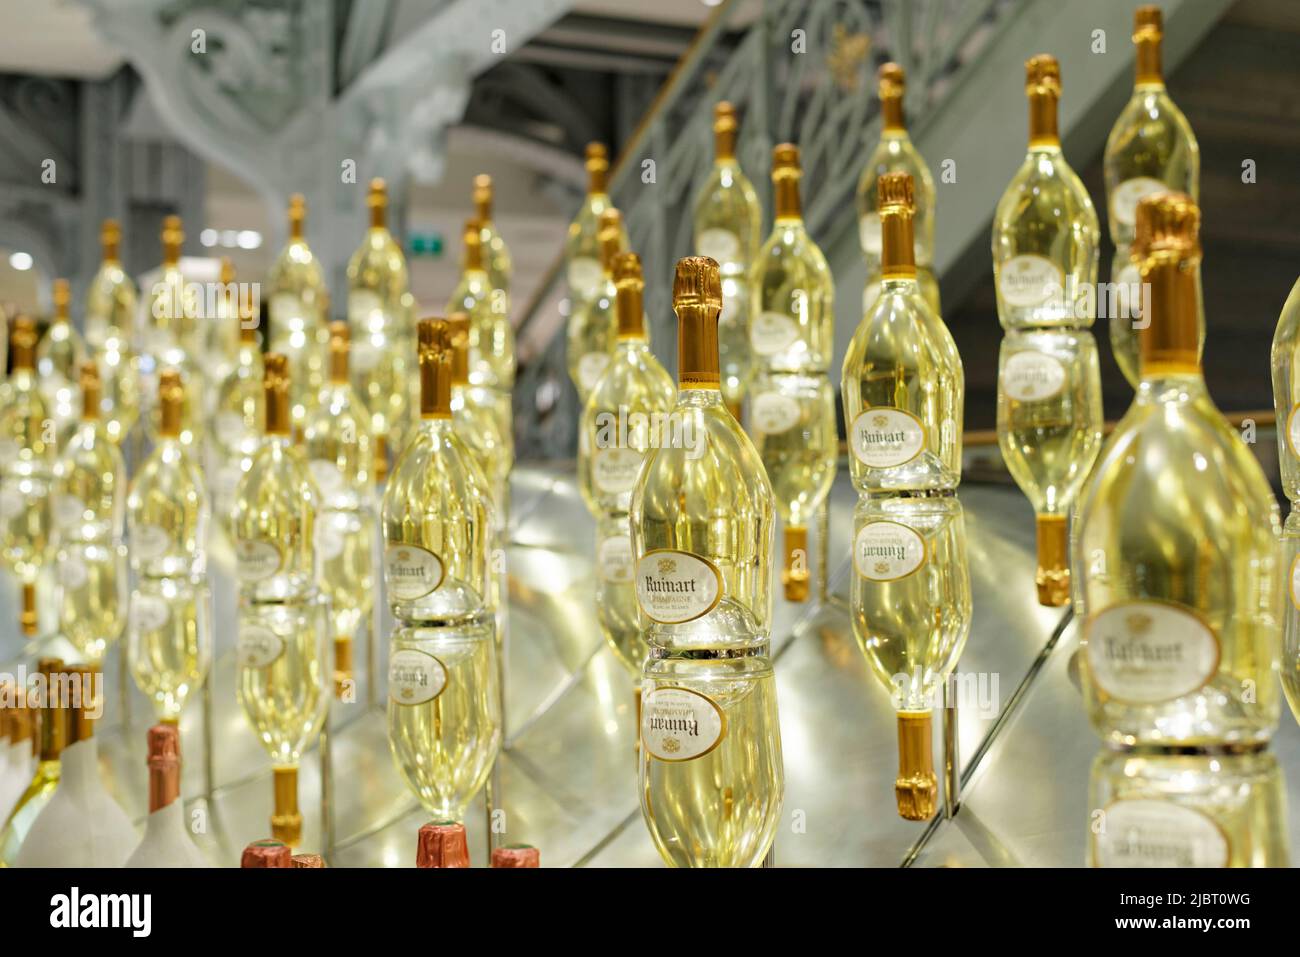 France, Paris, the department store of La Samaritaine, presentation of the champagne brand Ruinart Stock Photo